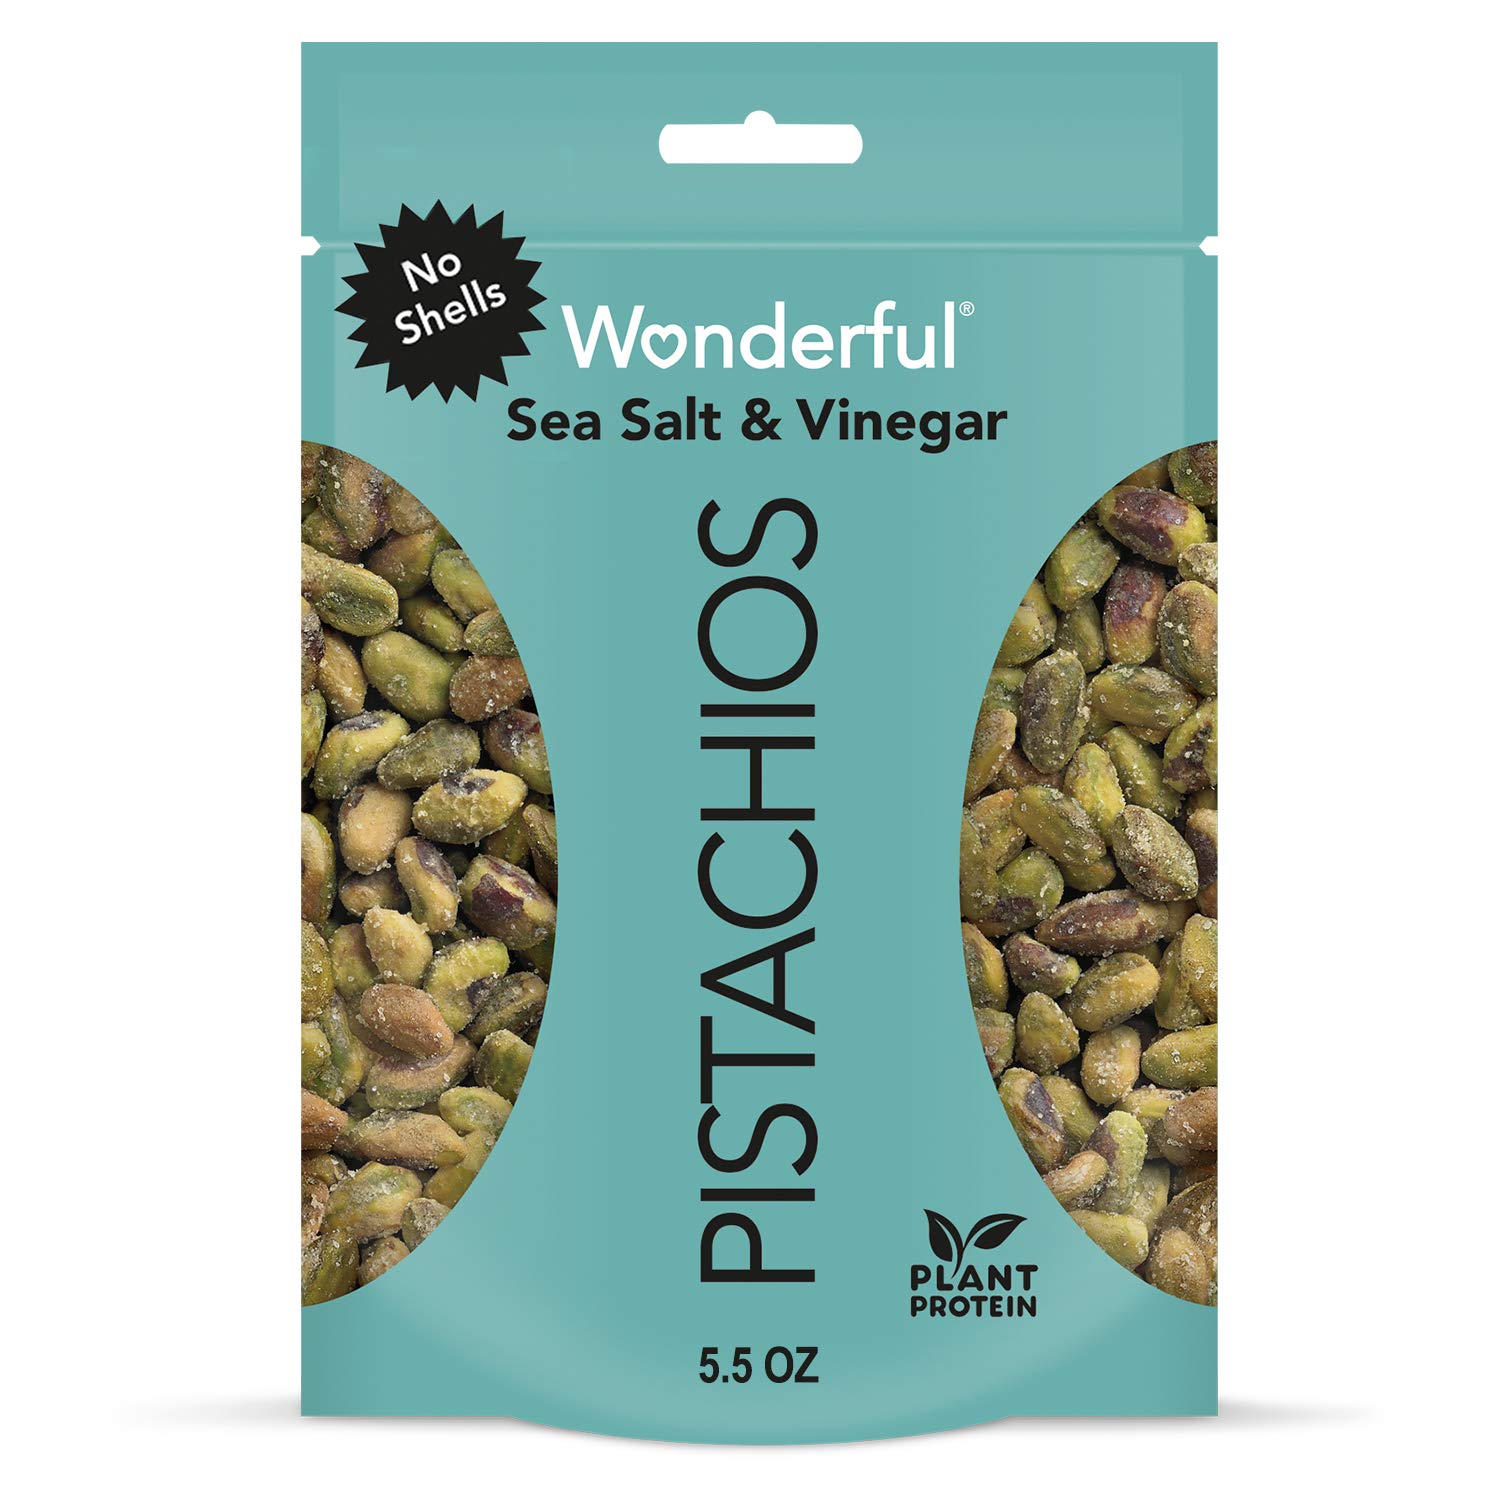 5.5oz Wonderful Pistachios w/ No Shells (Salt & Vinegar) $3.85 w/ S&S + Shipping is free w/ Prime or on $25+